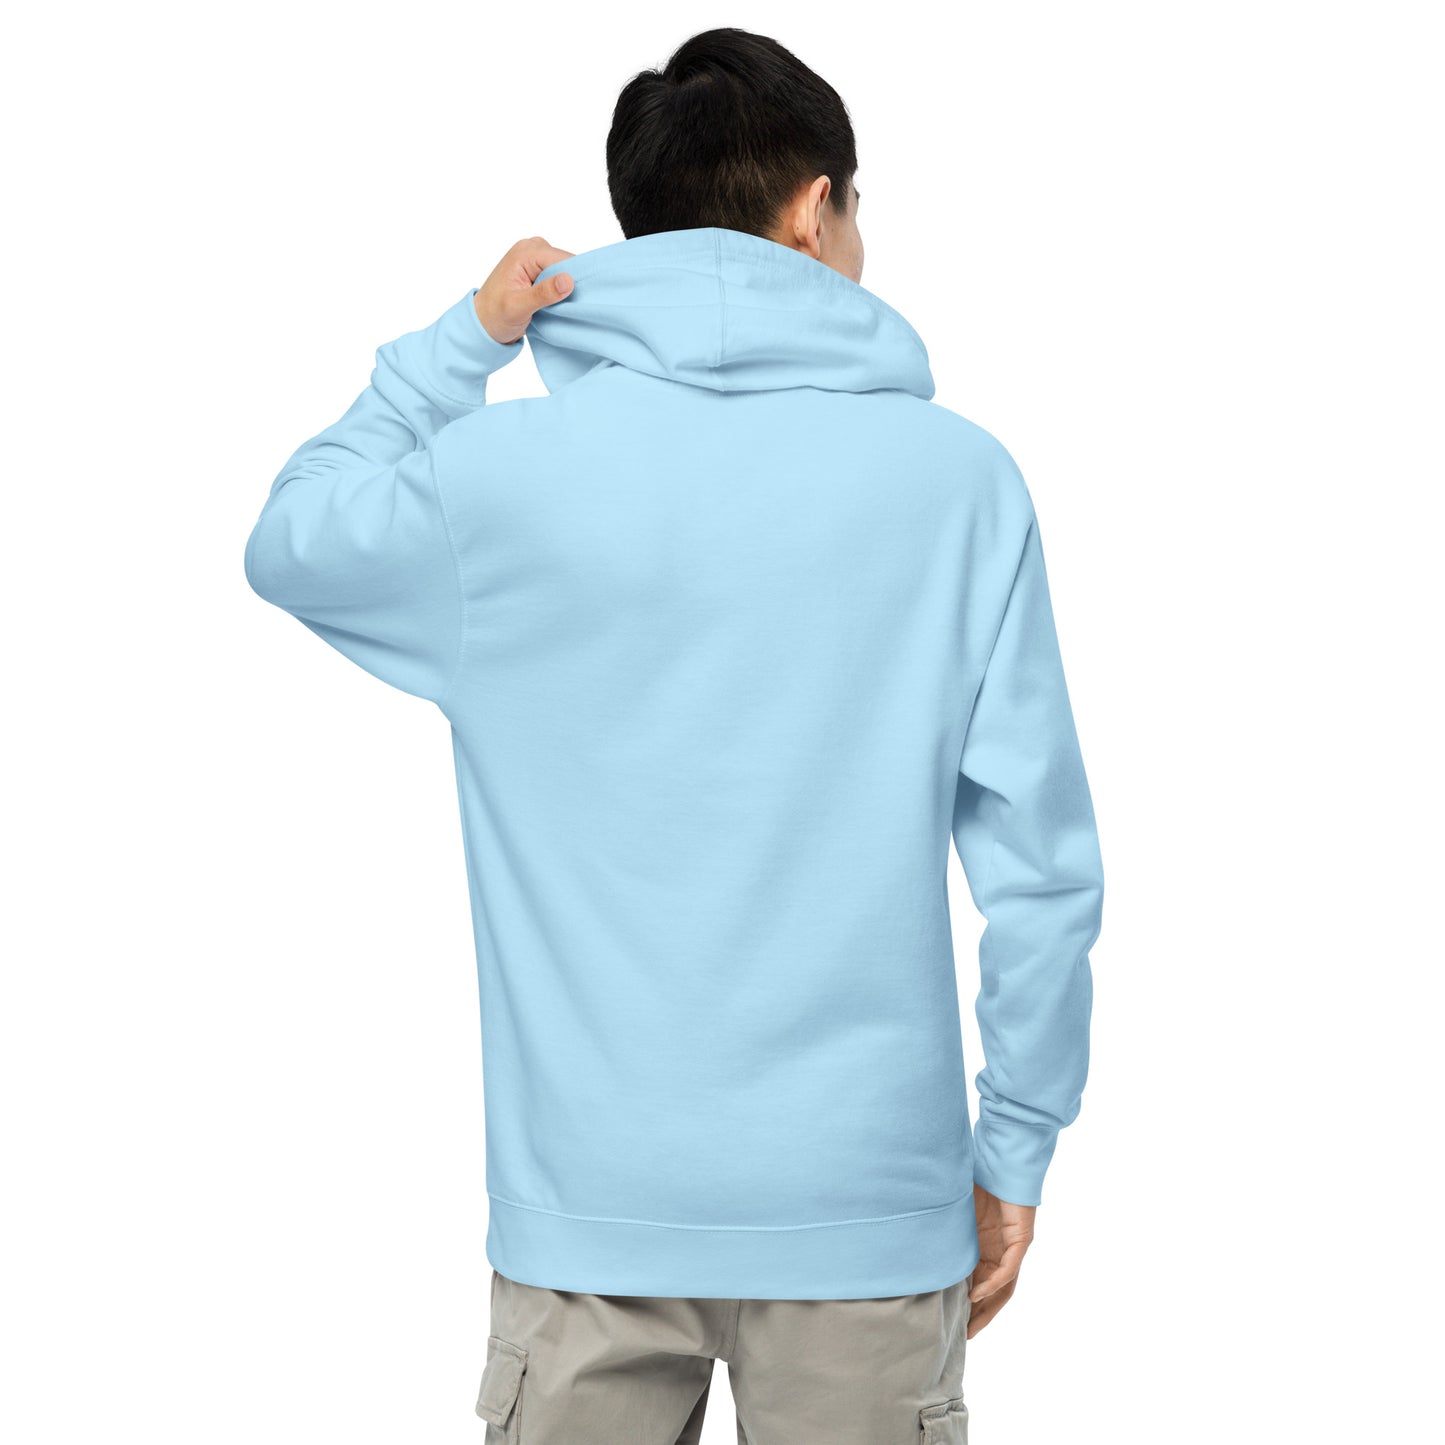 "Known" - Unisex midweight hoodie